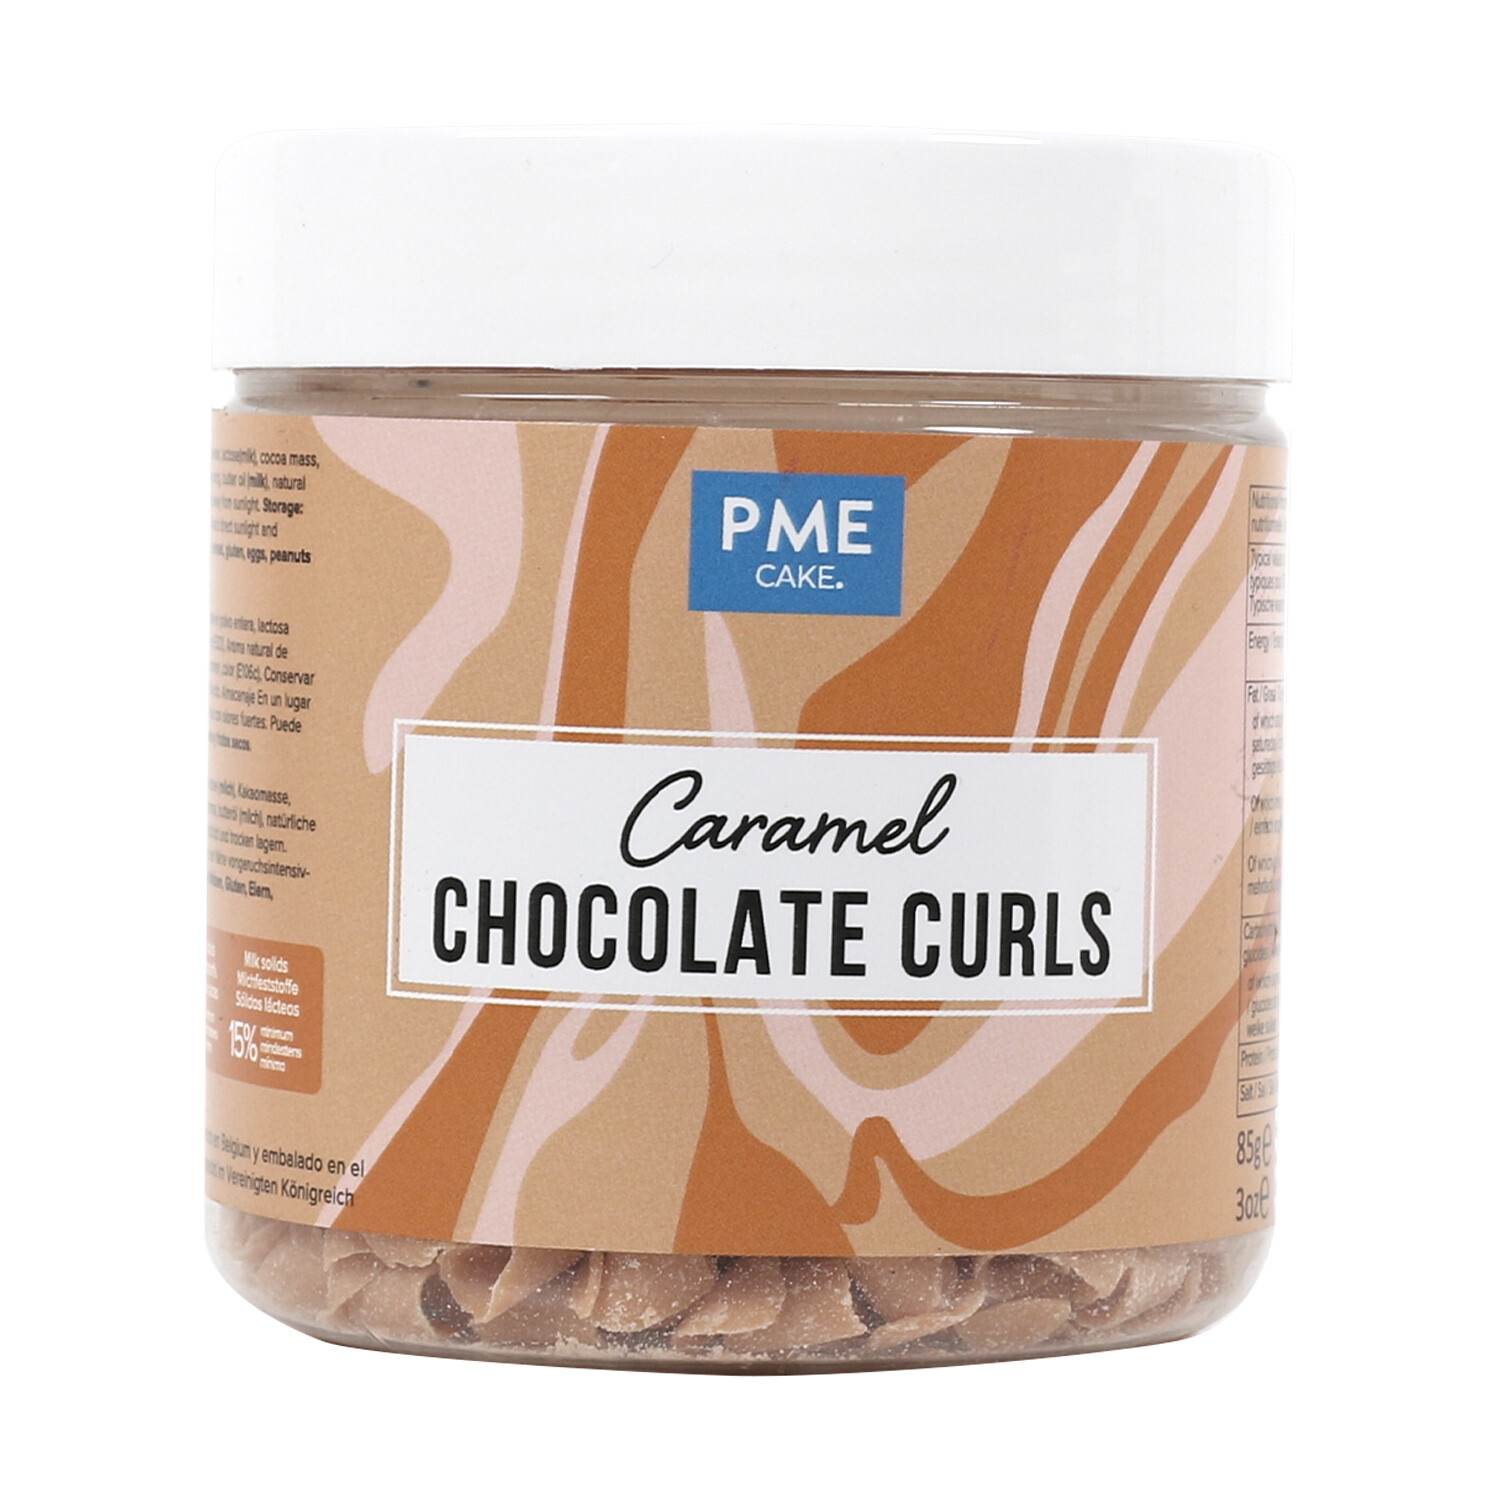 PME Chocolate Curls - Caramel Image